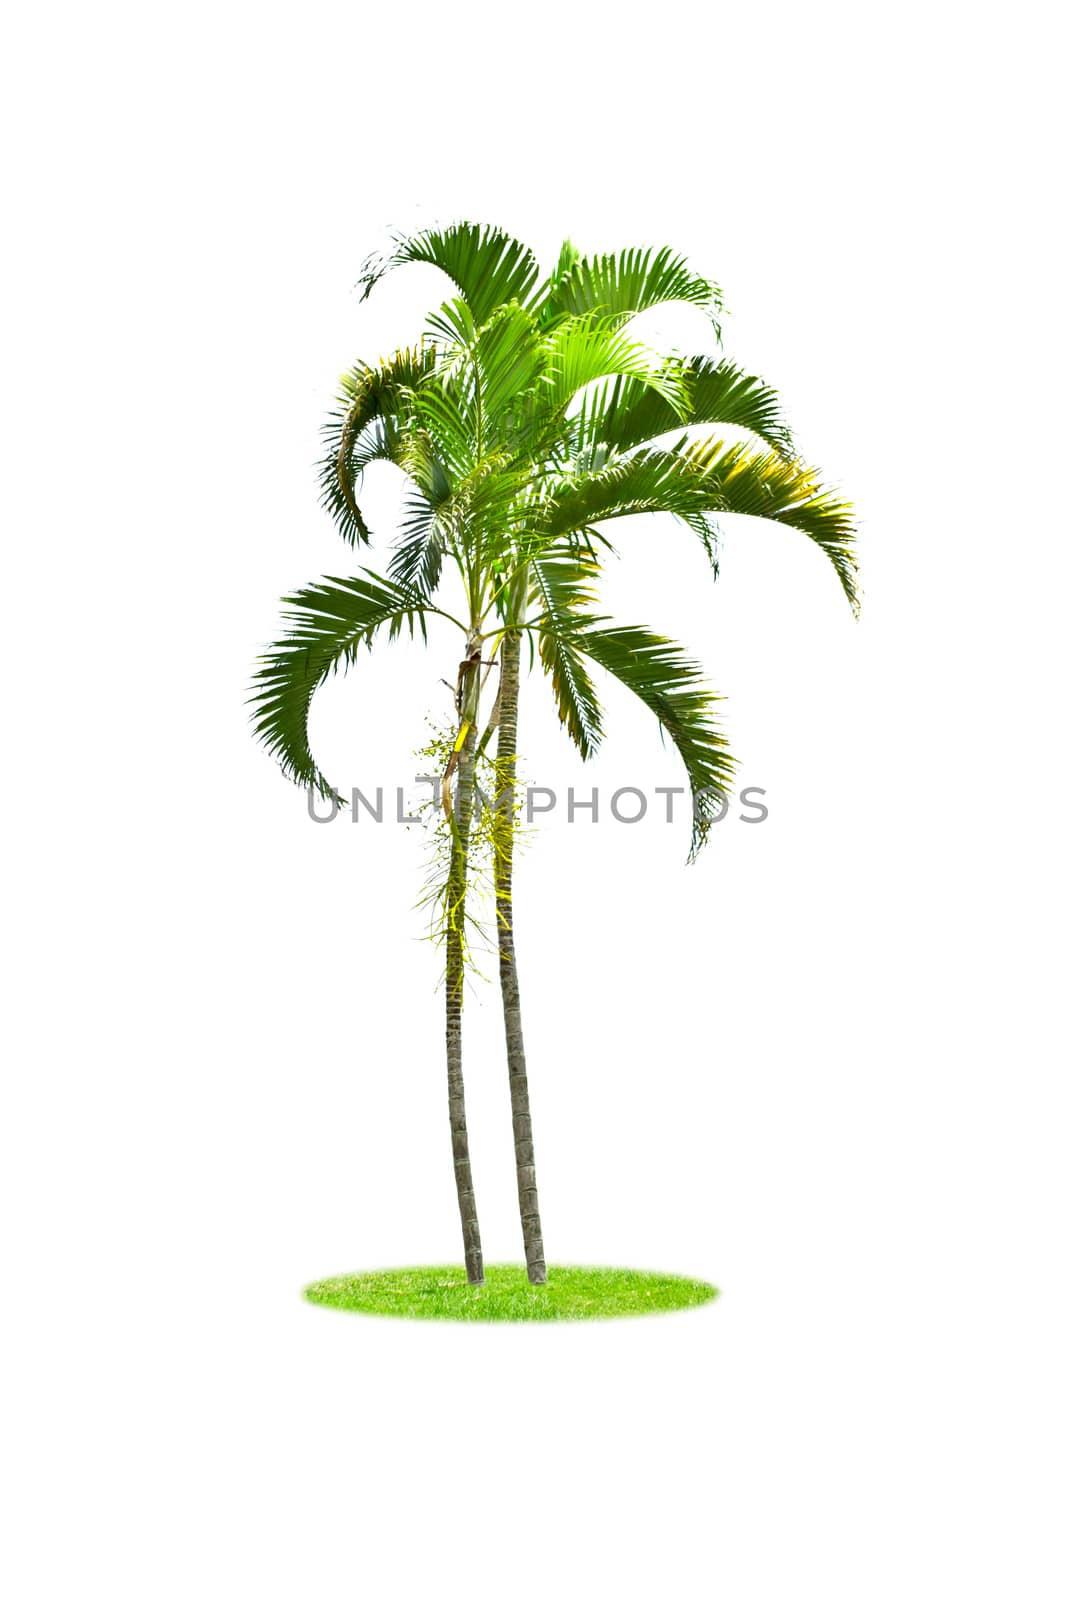 Palm isolated on white background